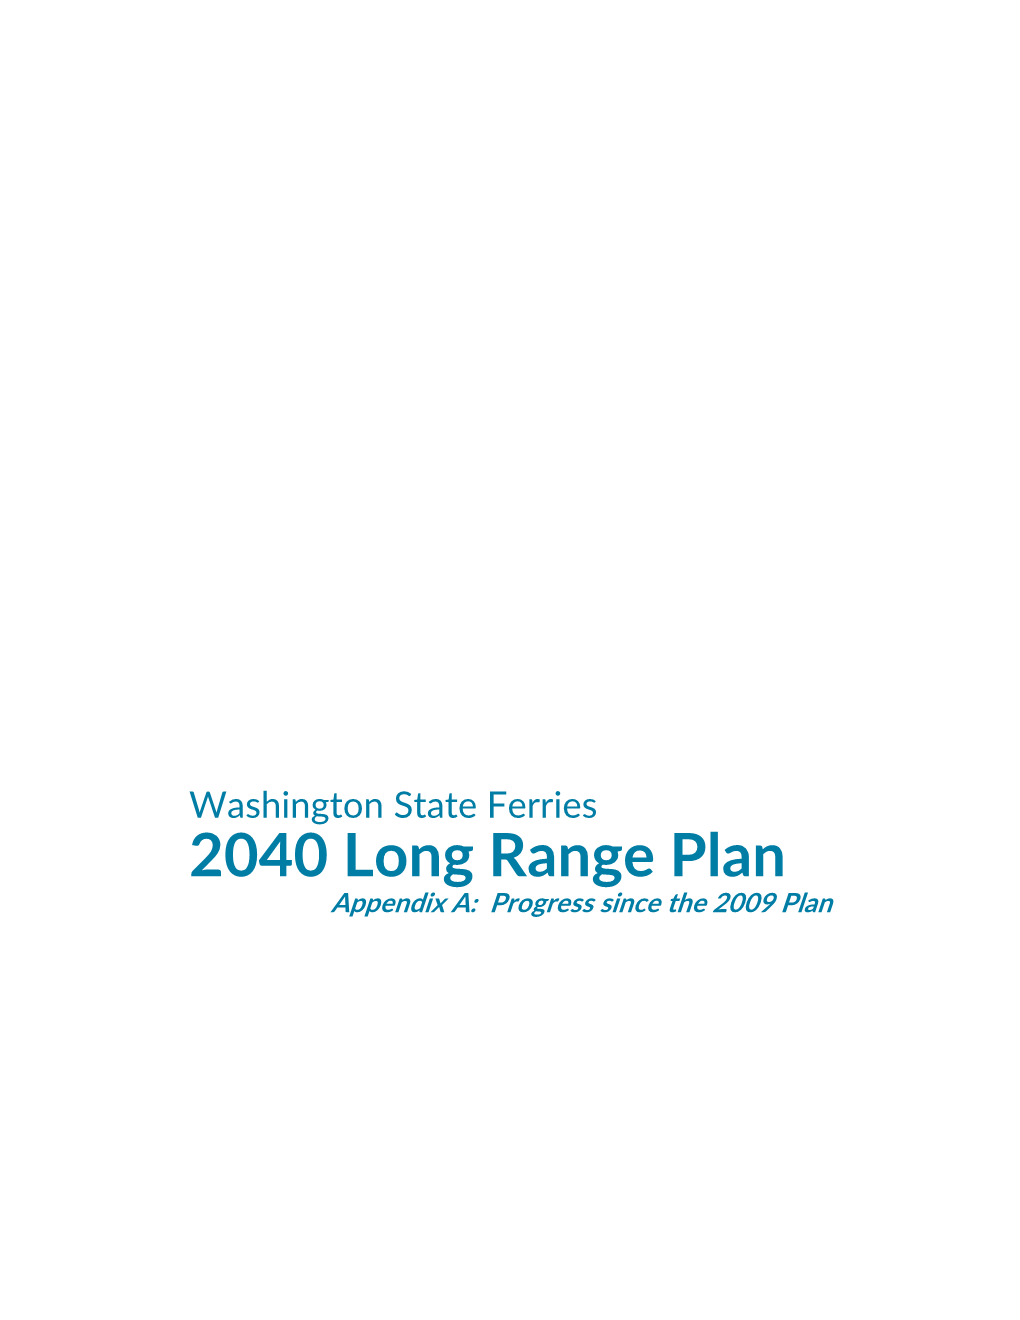 Washington State Ferries 2040 Long Range Plan Appendices